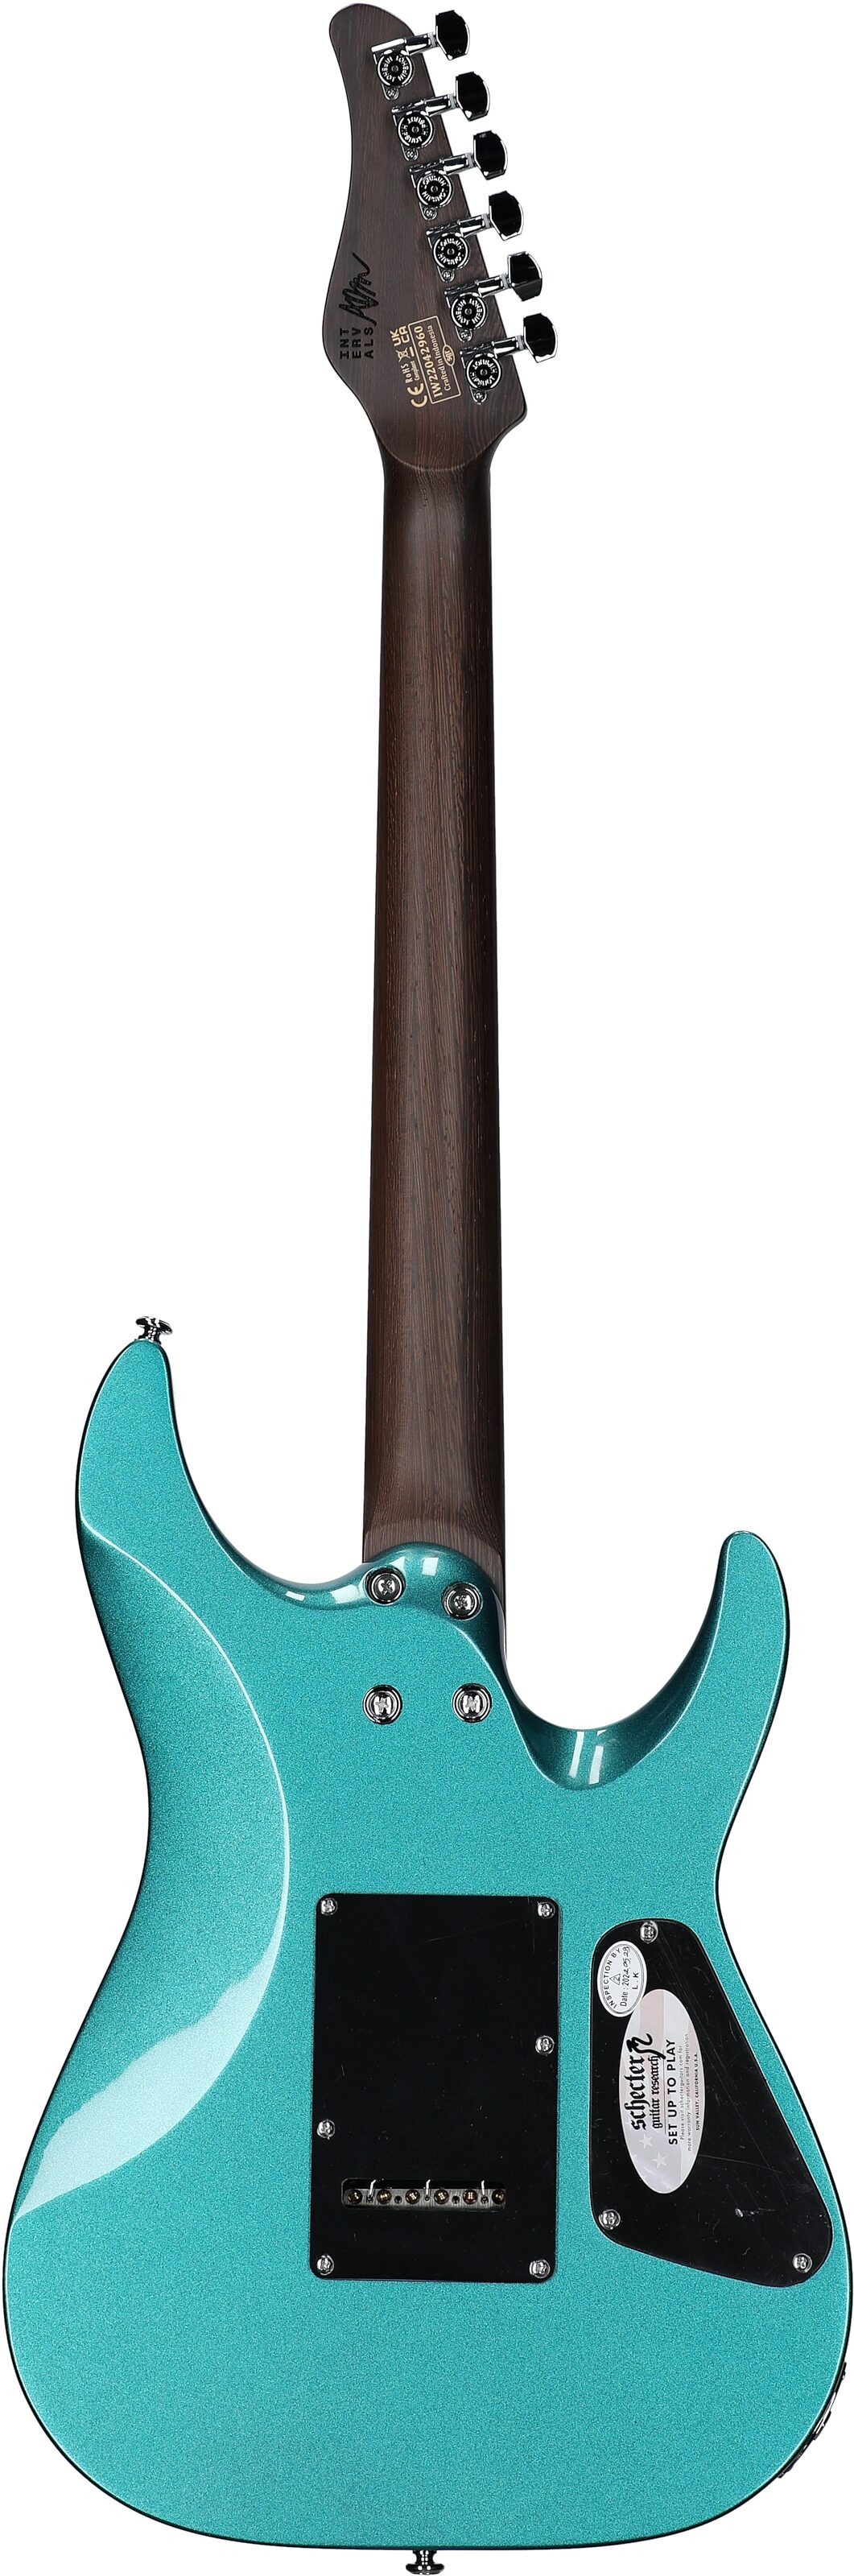 Schecter Aaron Marshall AM-6 Tremolo Electric Guitar, Left-Handed